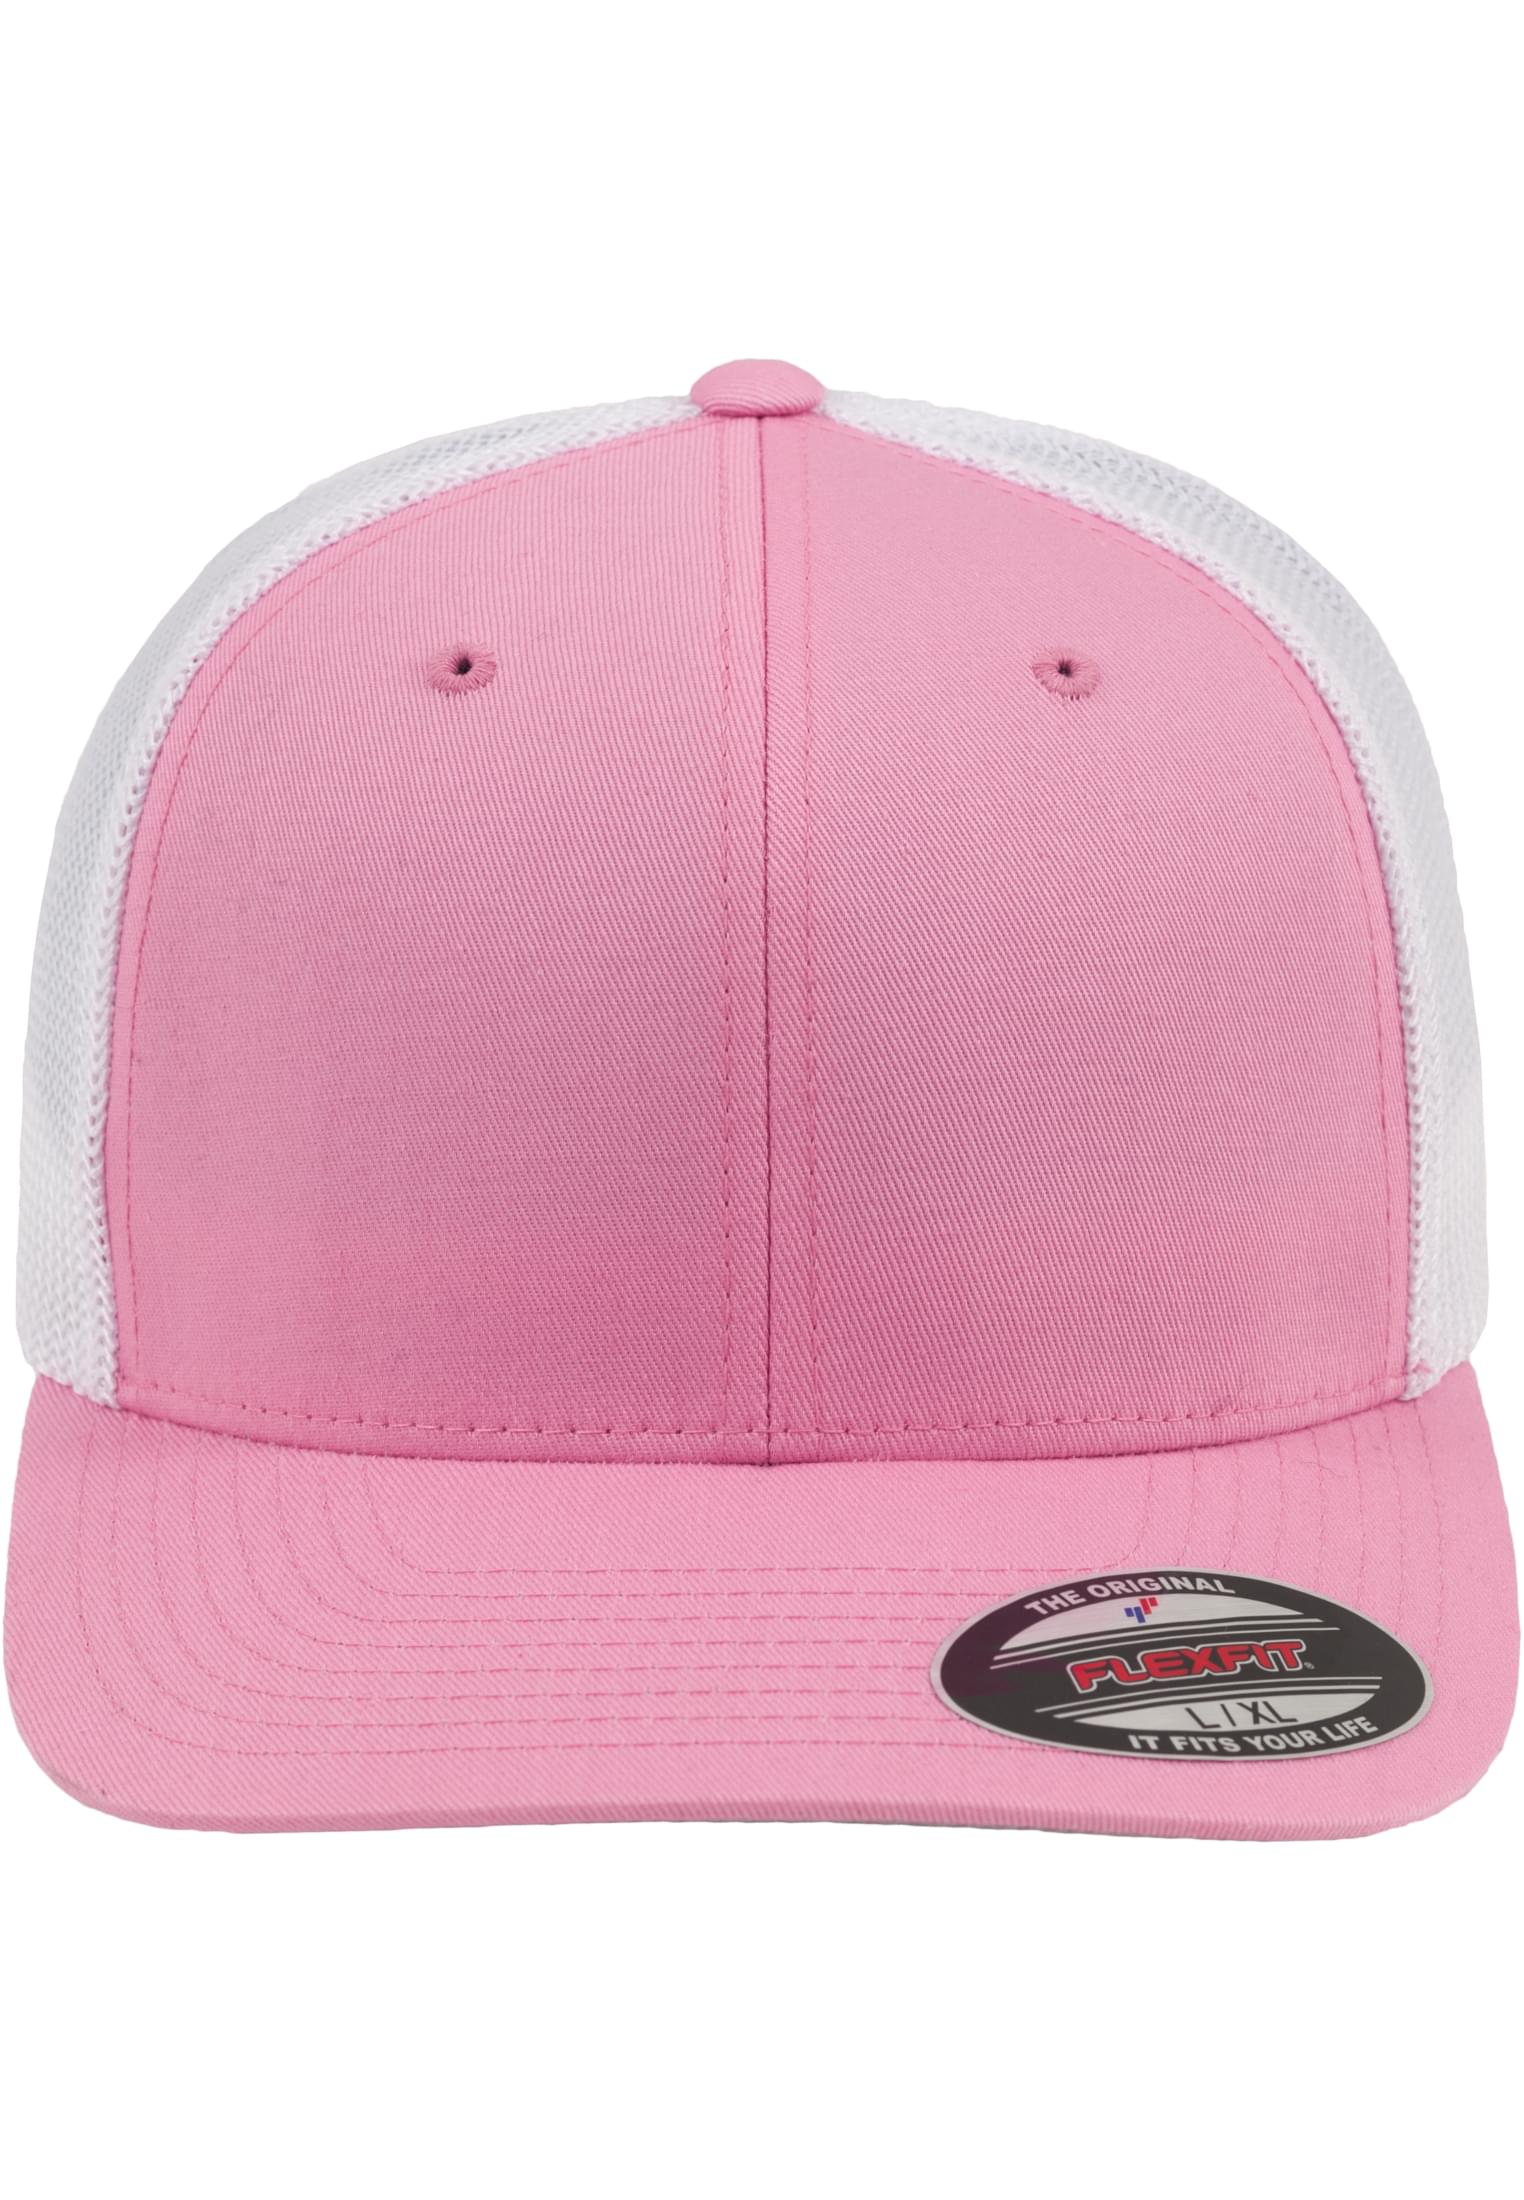  Mesh Trucker 2-Tone Cap in Farbe pink/wht